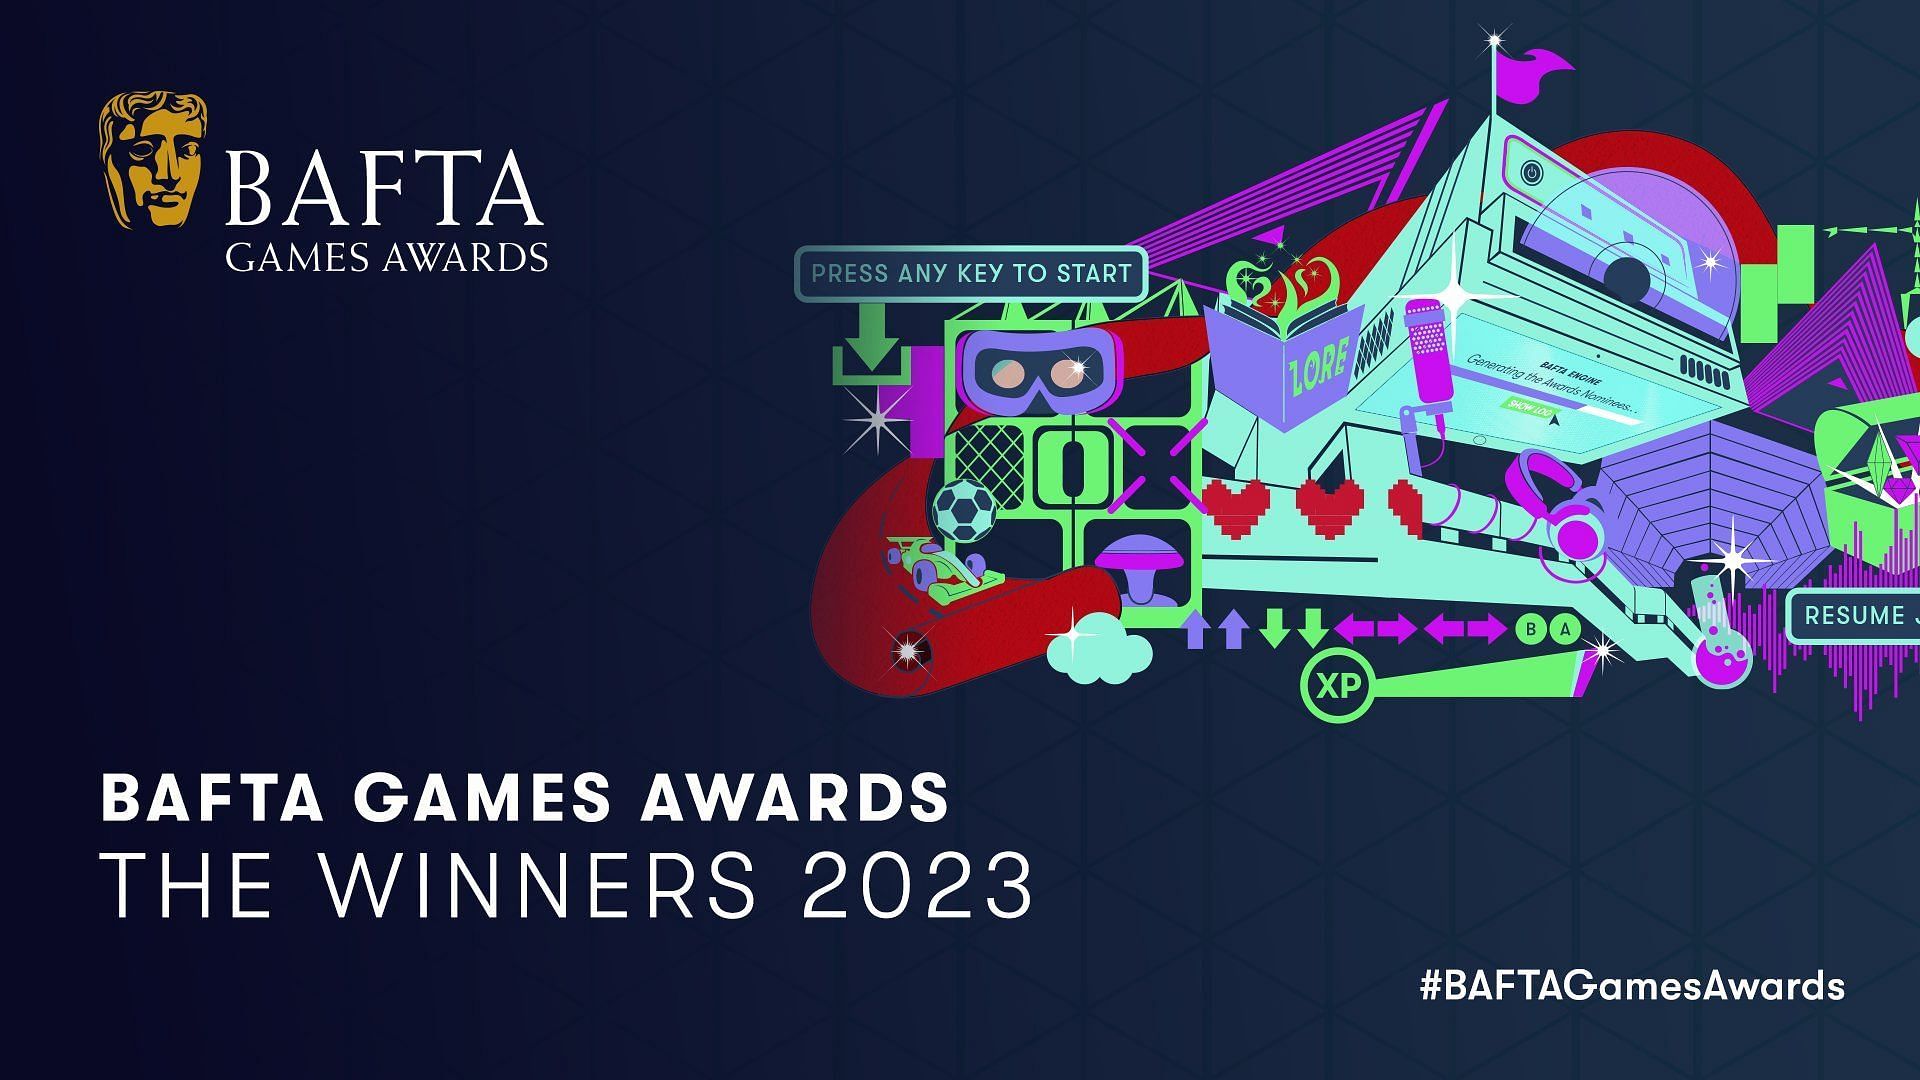 BAFTA Games Awards 2023 All winners across all categories